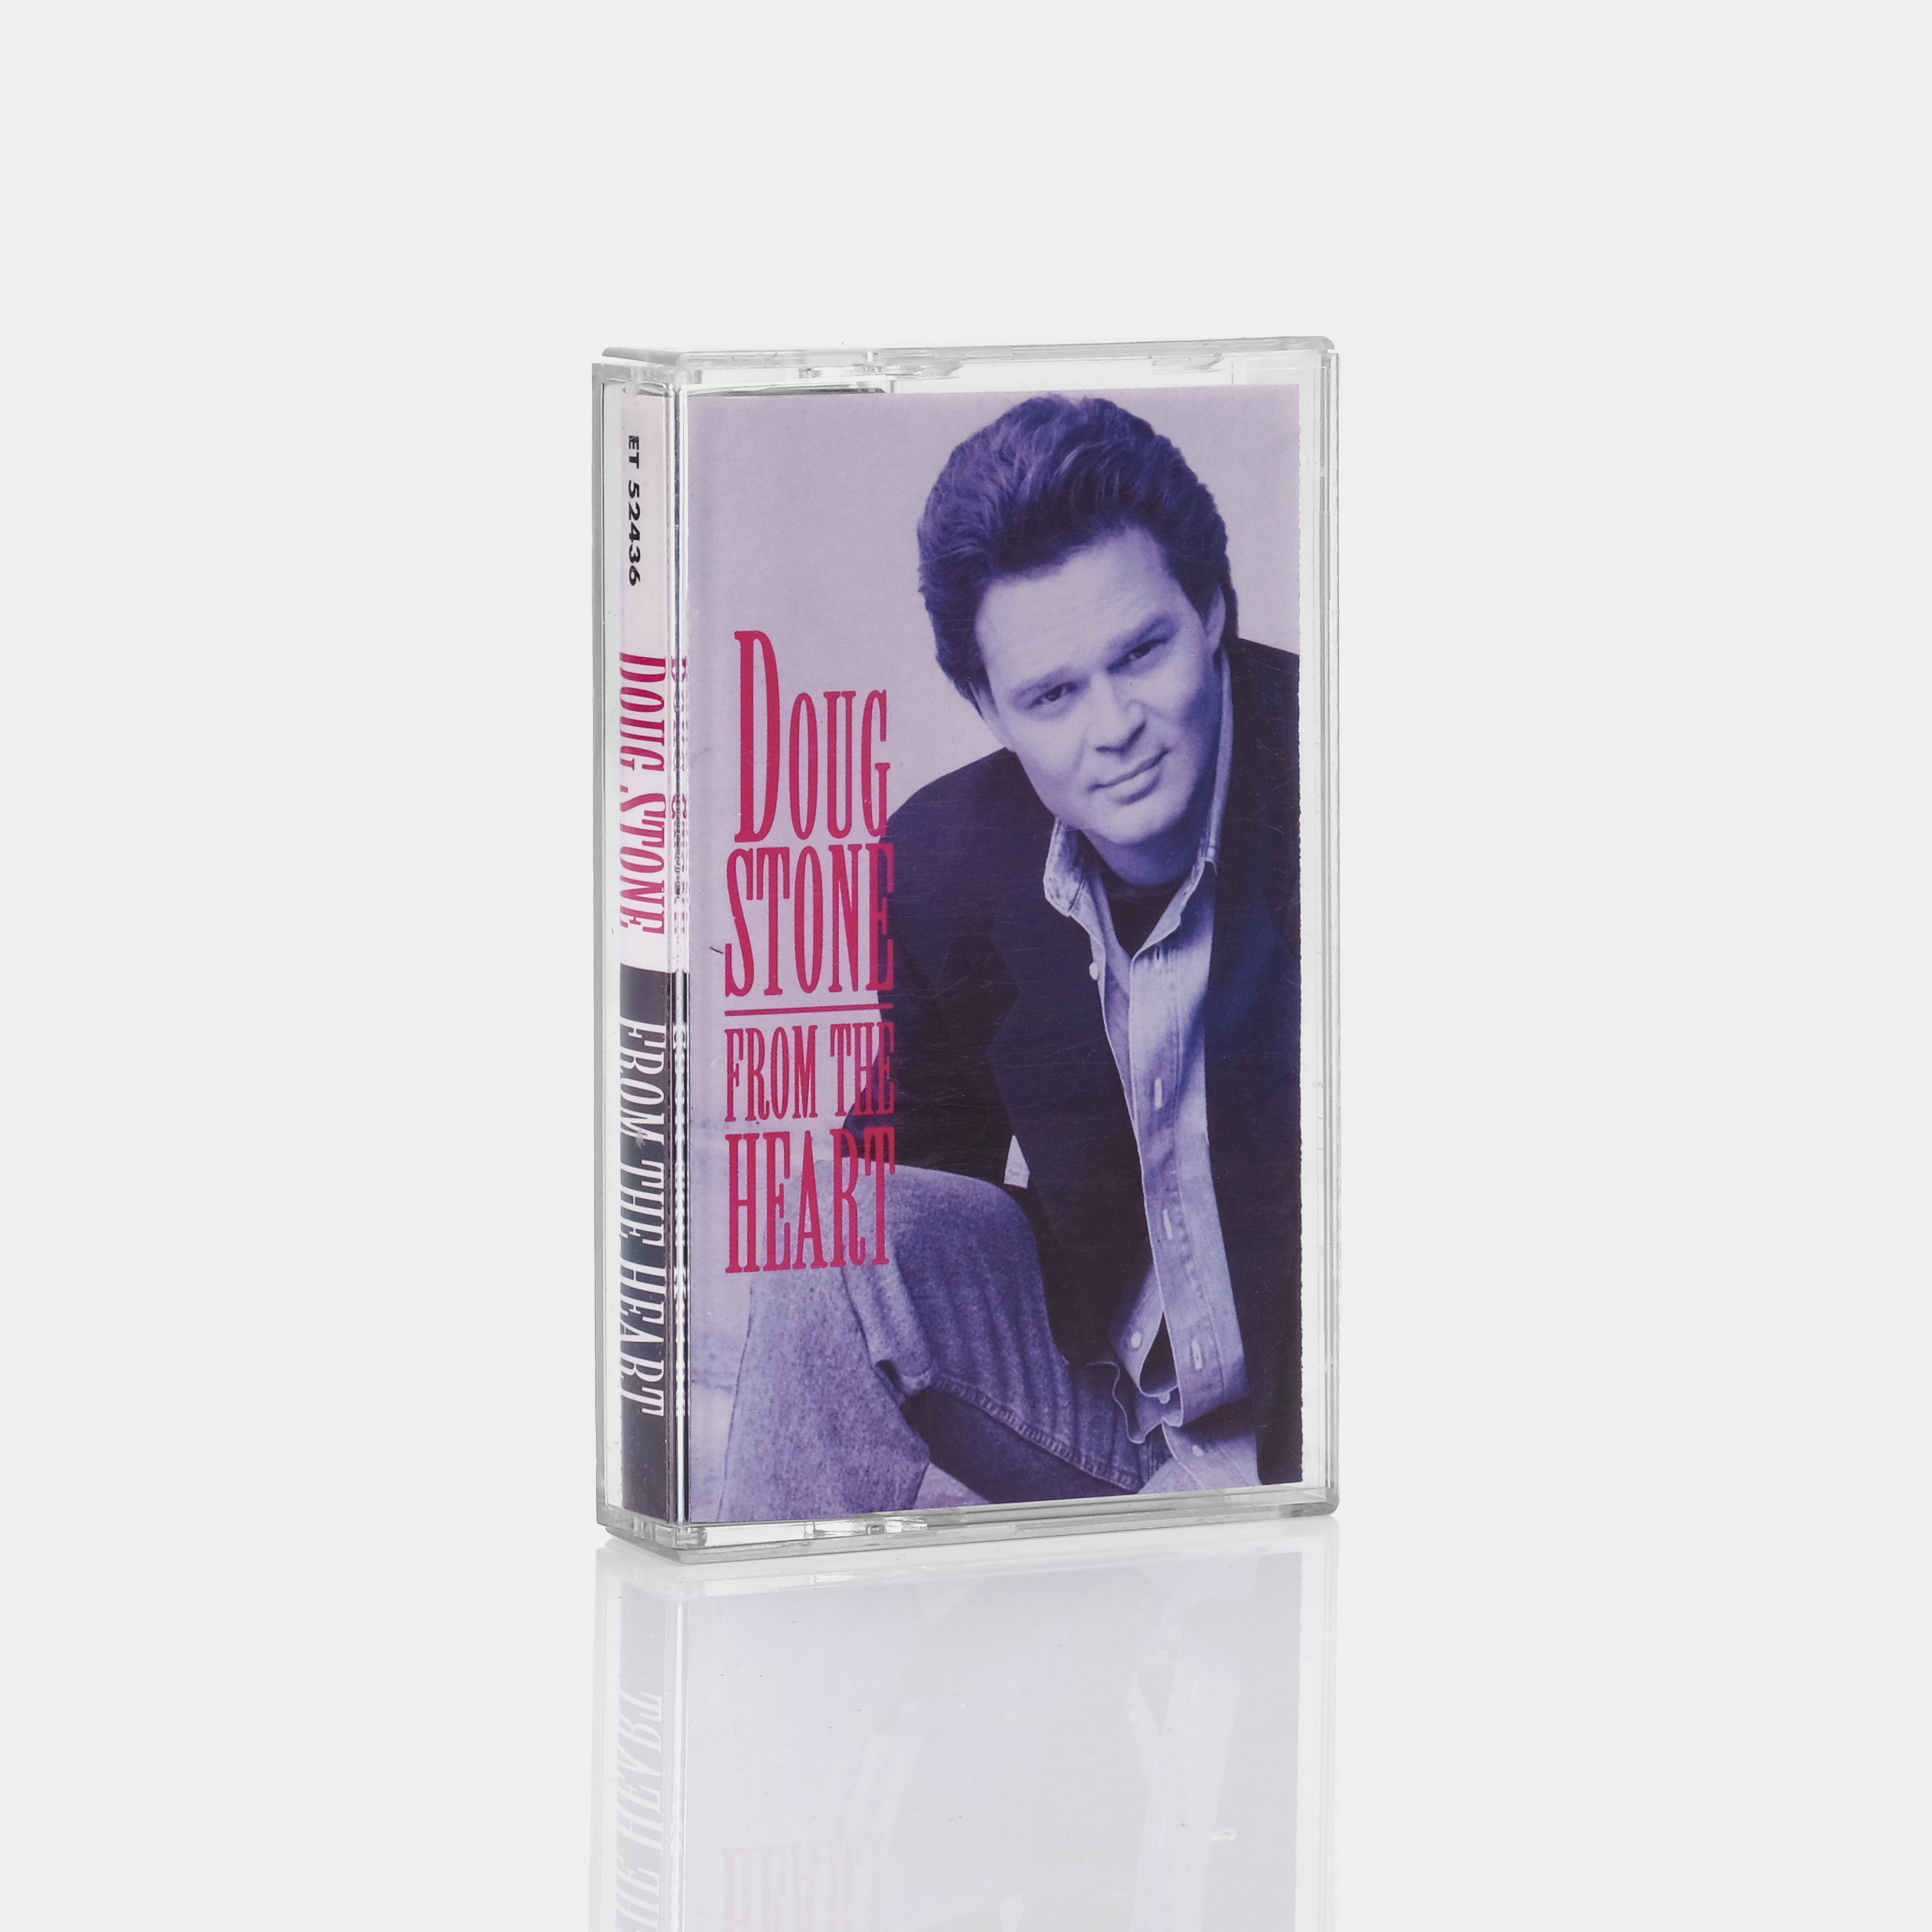 Doug Stone - From The Heart Cassette Tape